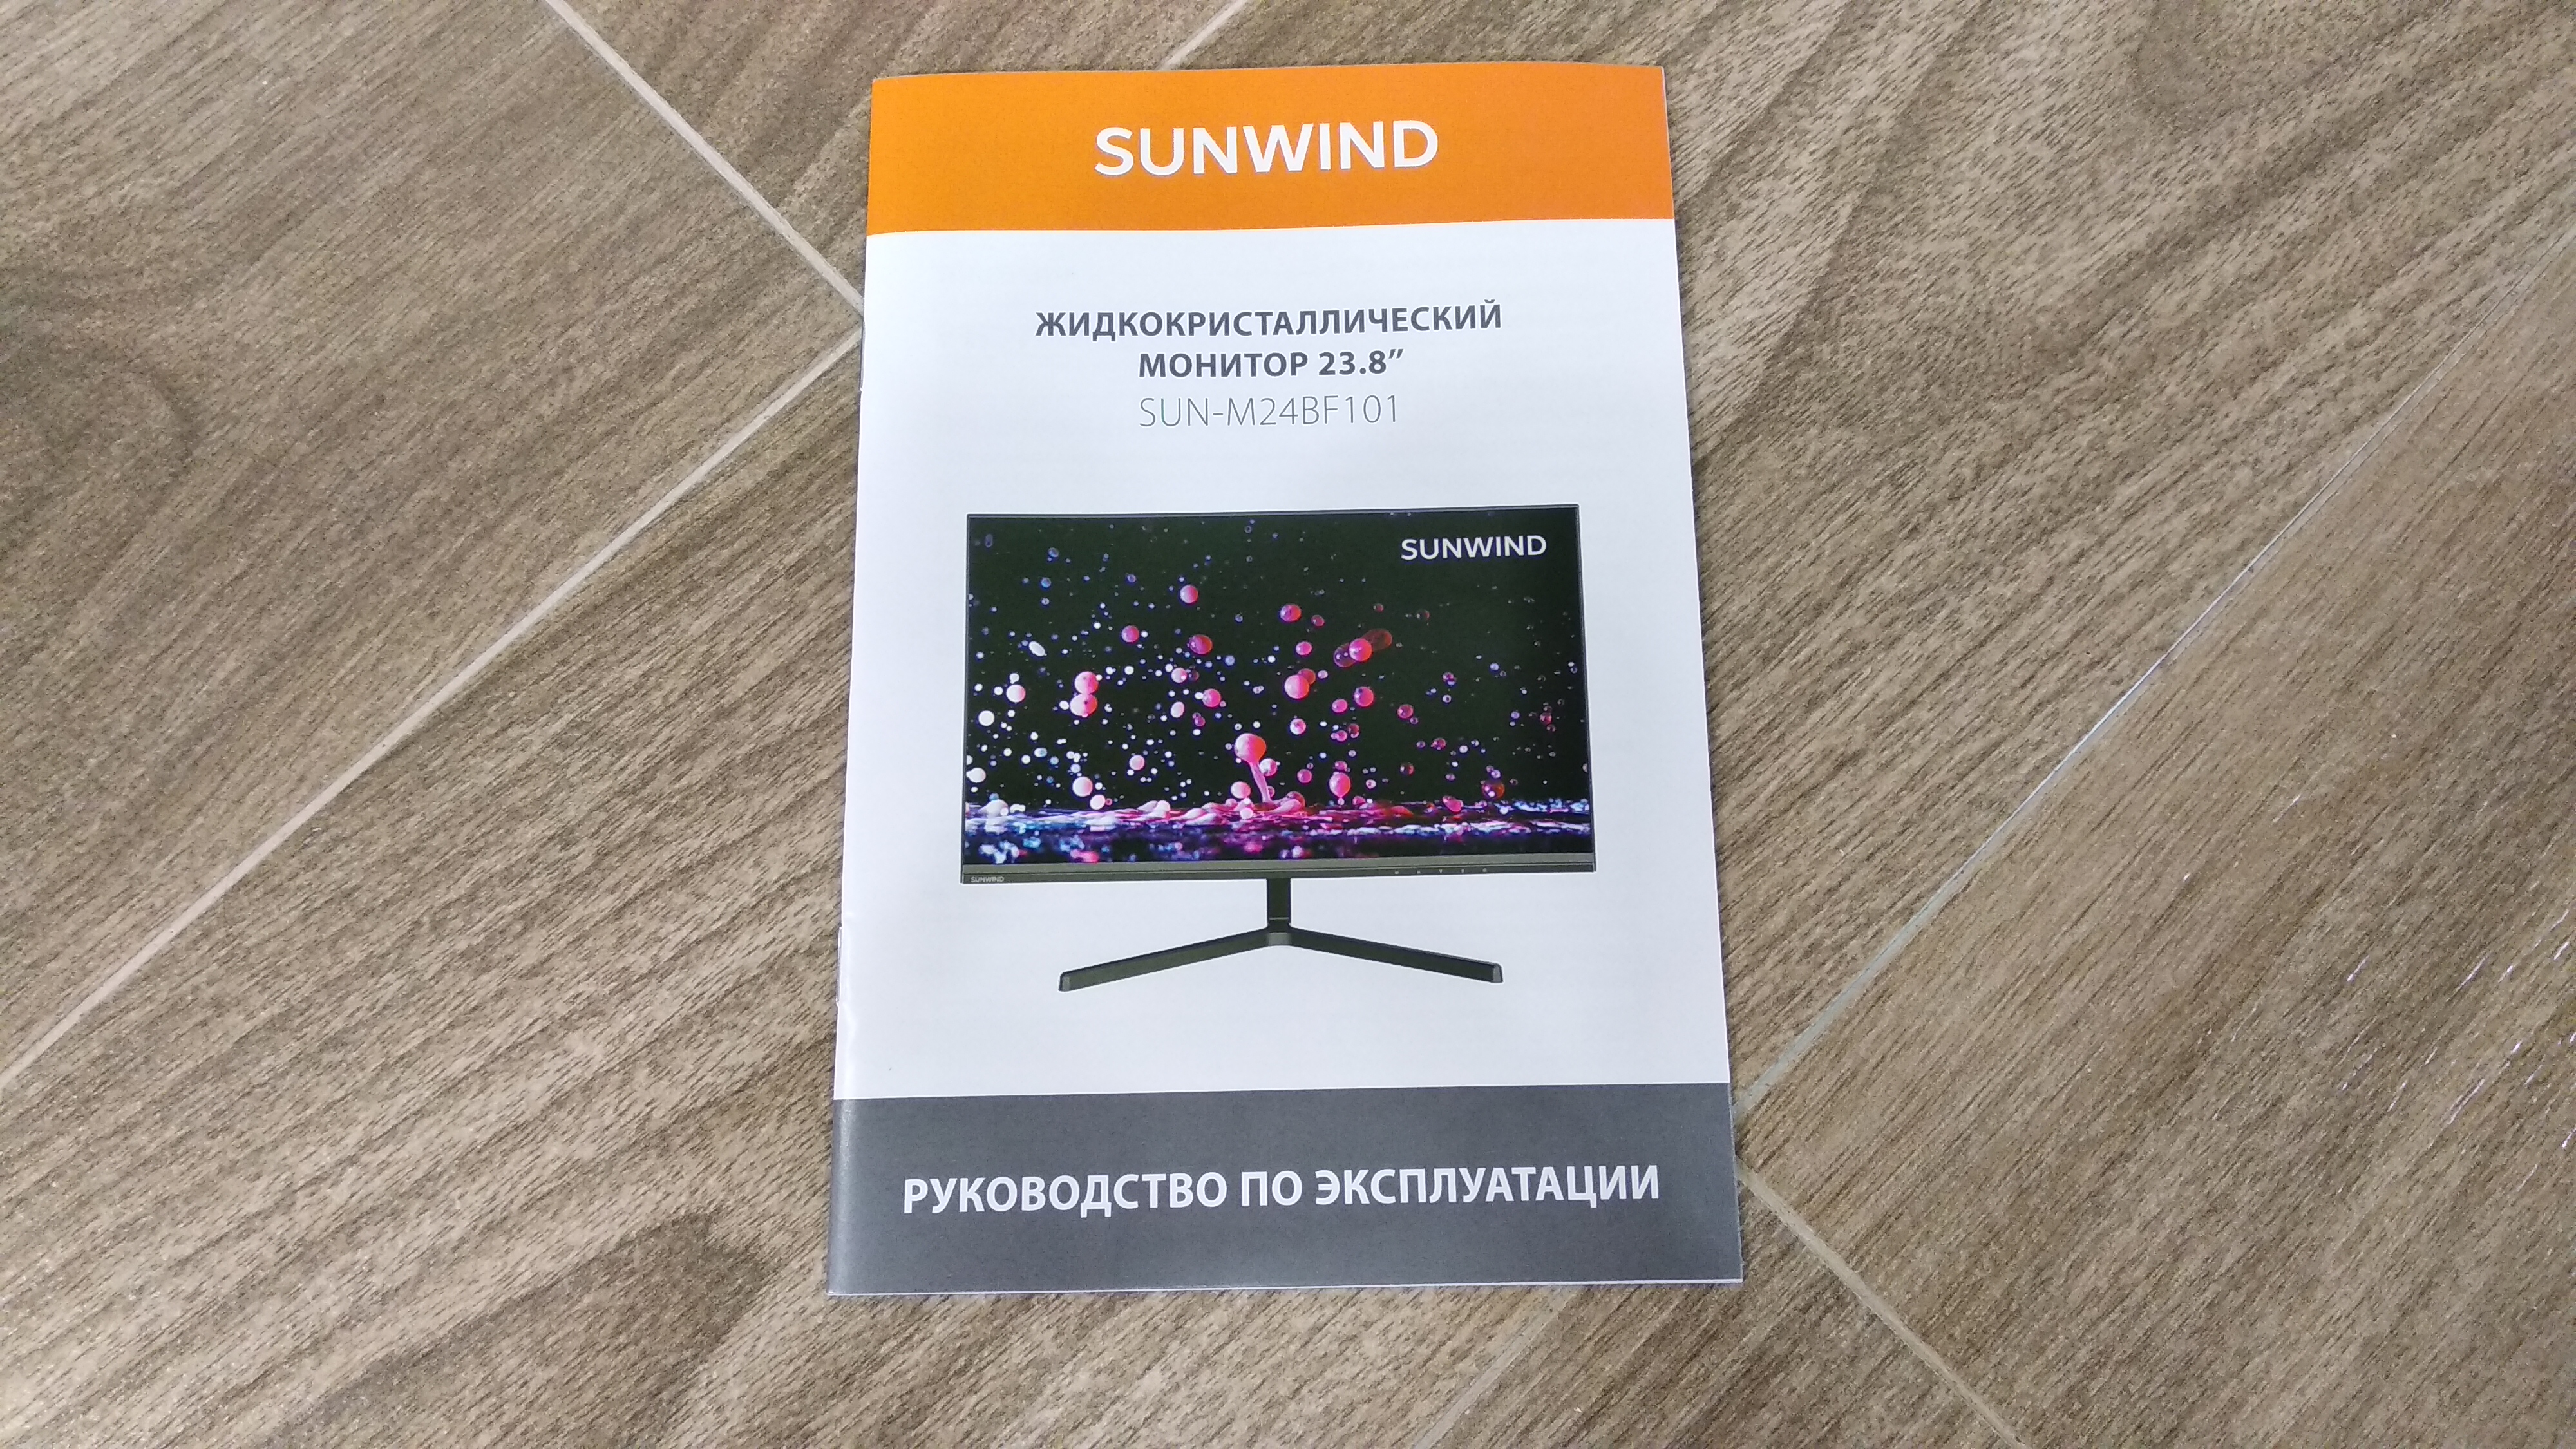 Телевизор sunwind отзывы. Sunwind монитор. Монитор Sunwind Sun-m24bf101. Монитор Sunwind Sun-m24bf101 23.8 черный. Sunwind монитор 23.